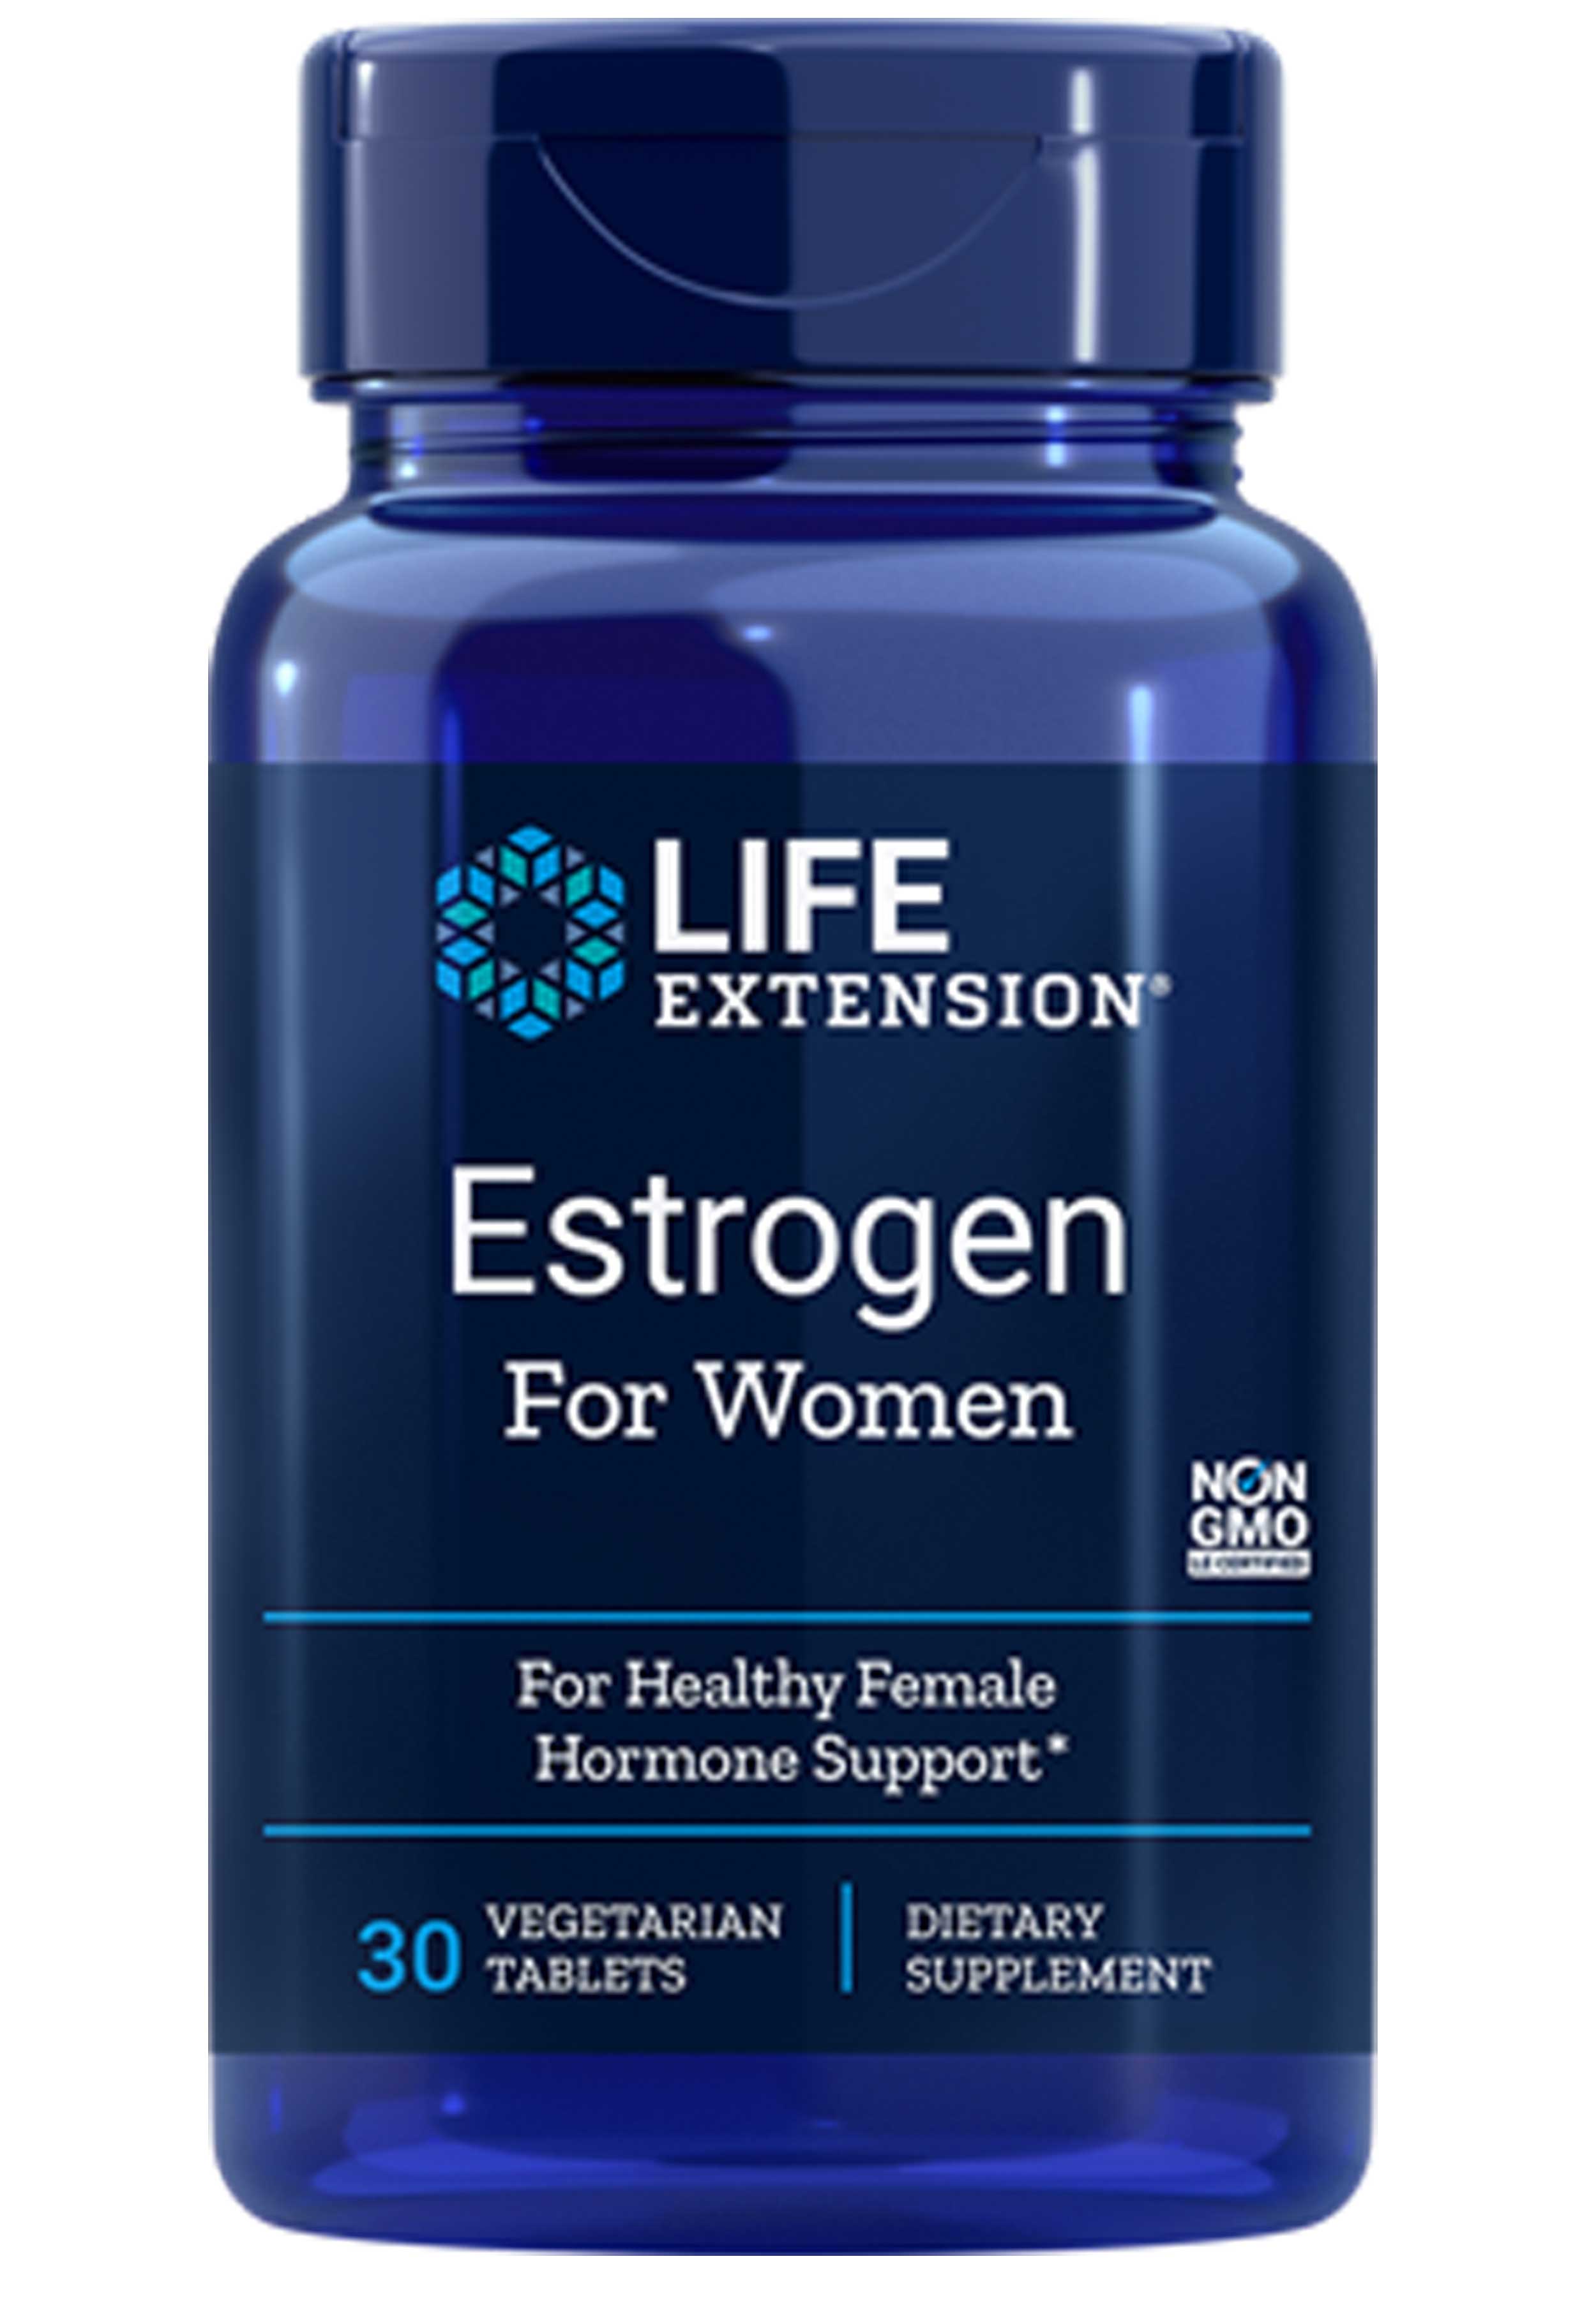 Life Extension Estrogen For Women